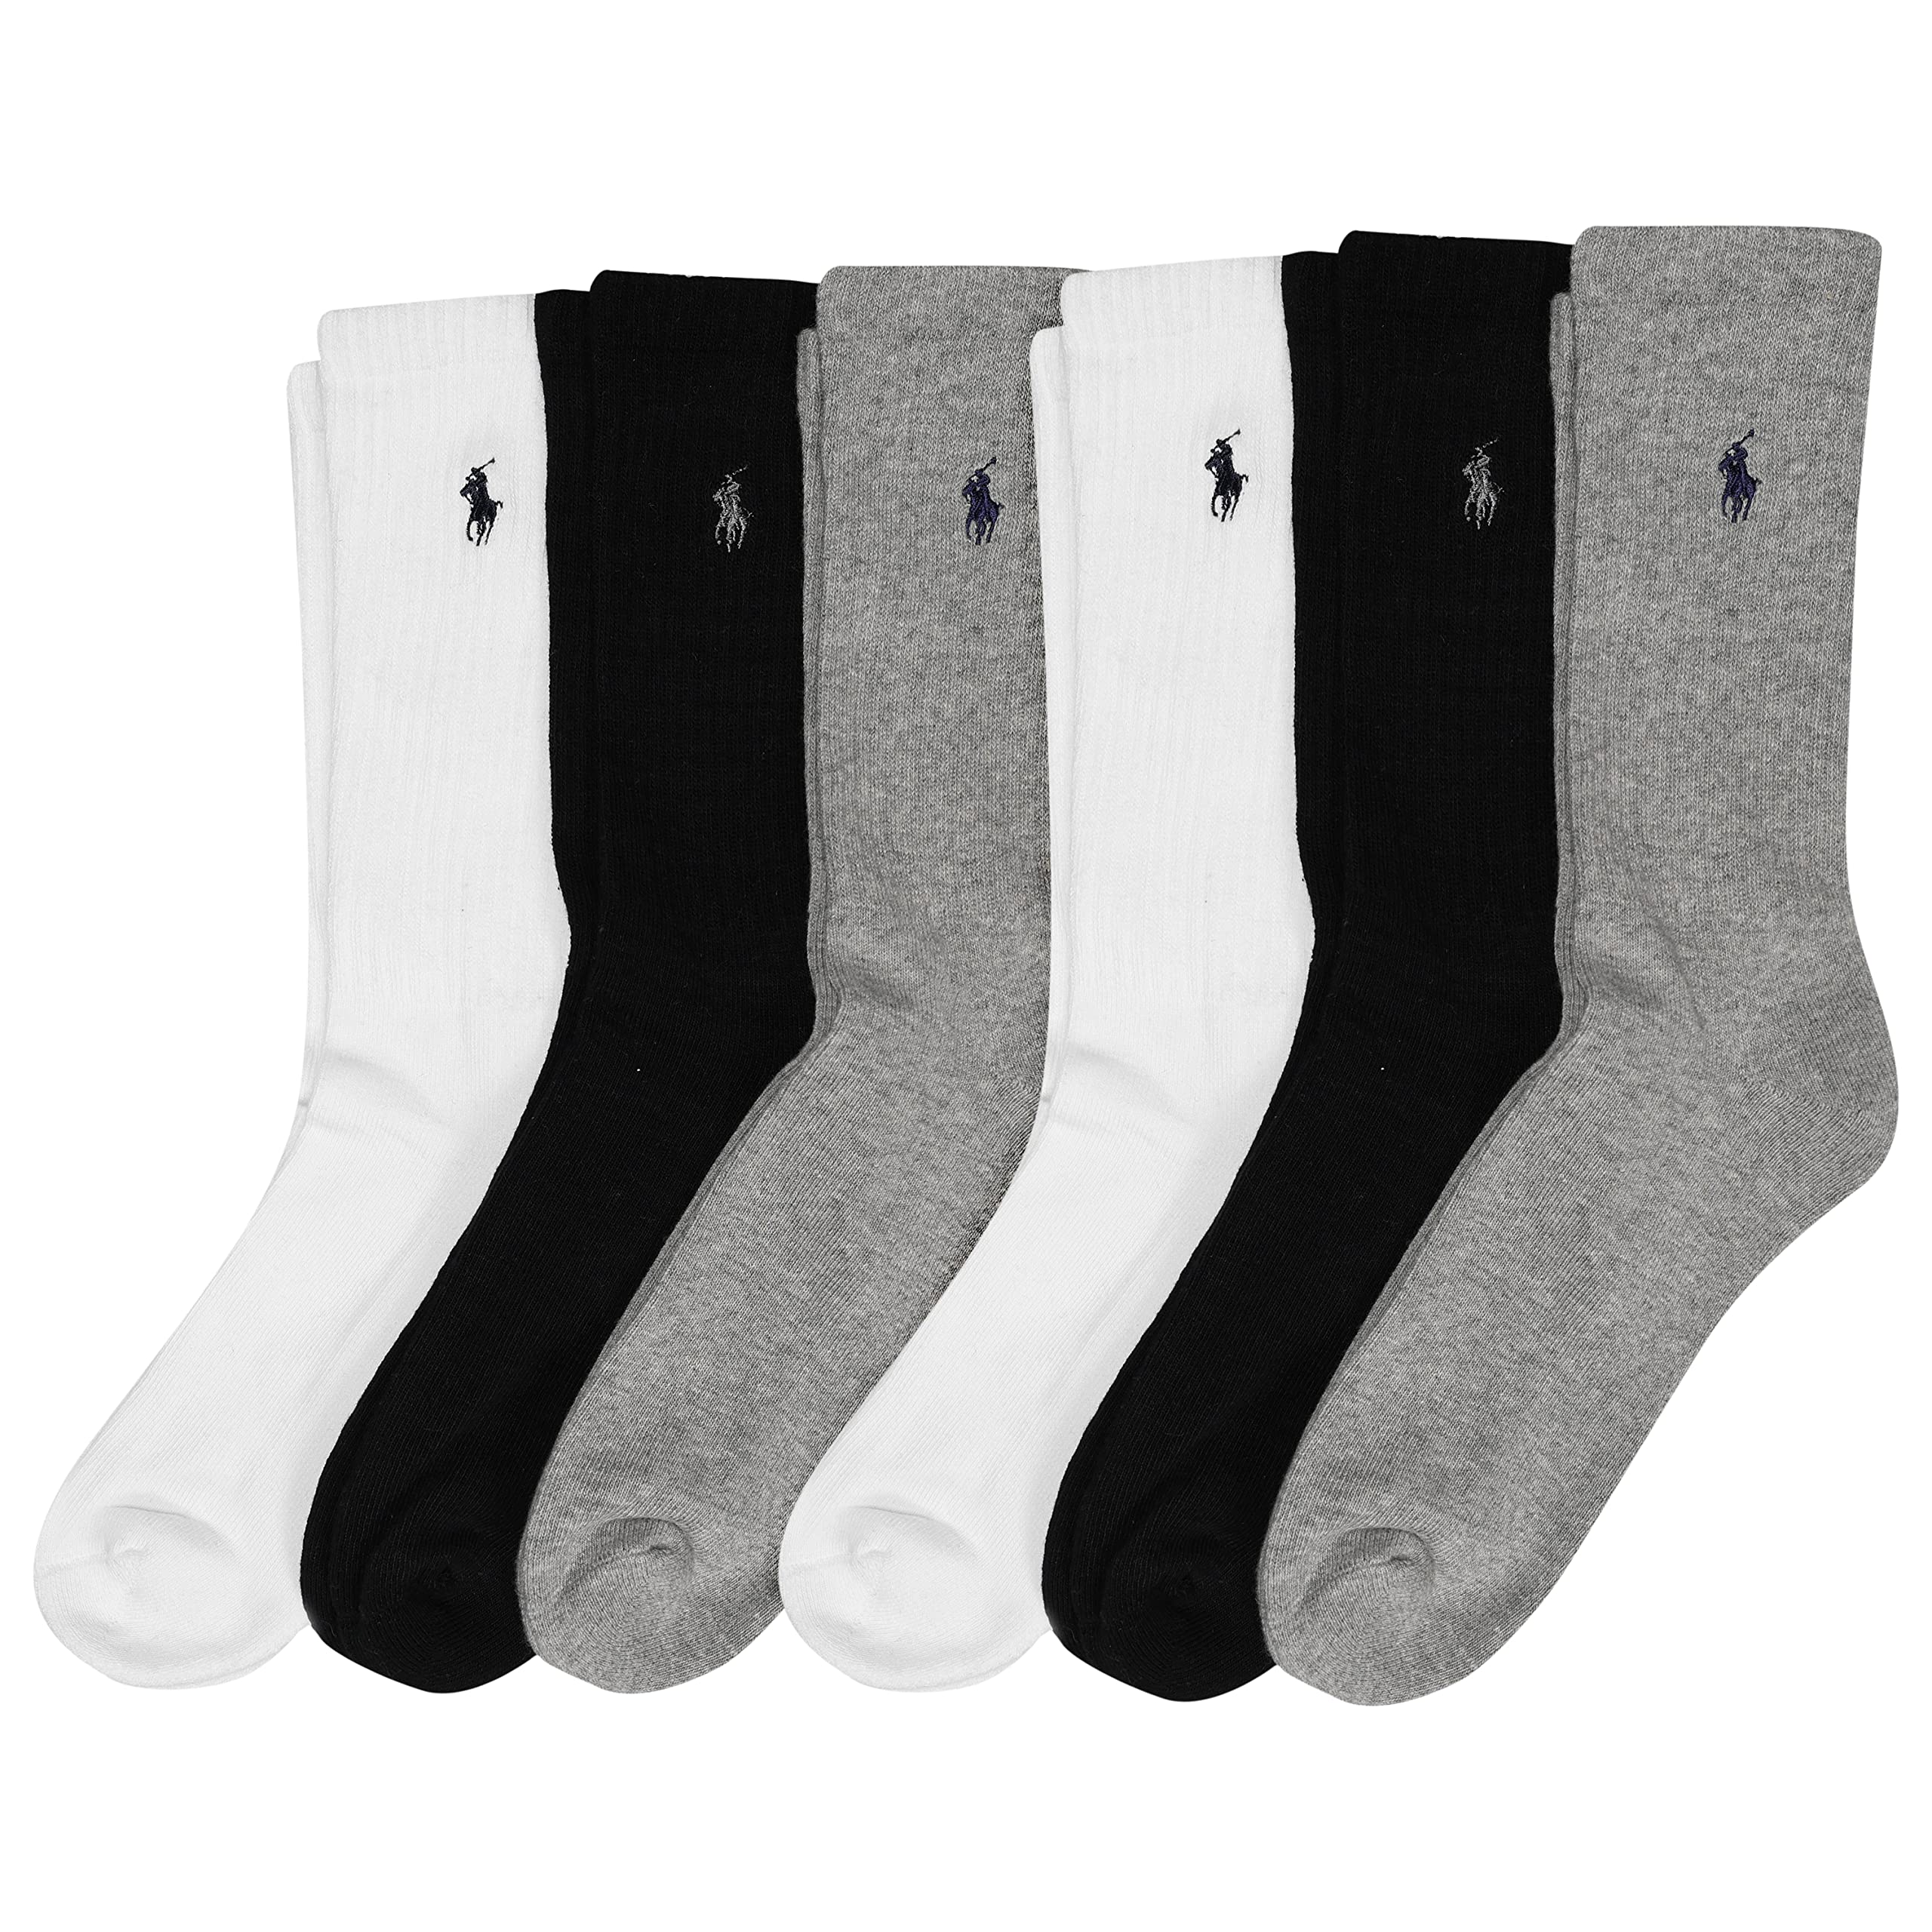 Aprender acerca 36+ imagen polo ralph lauren classic sport socks